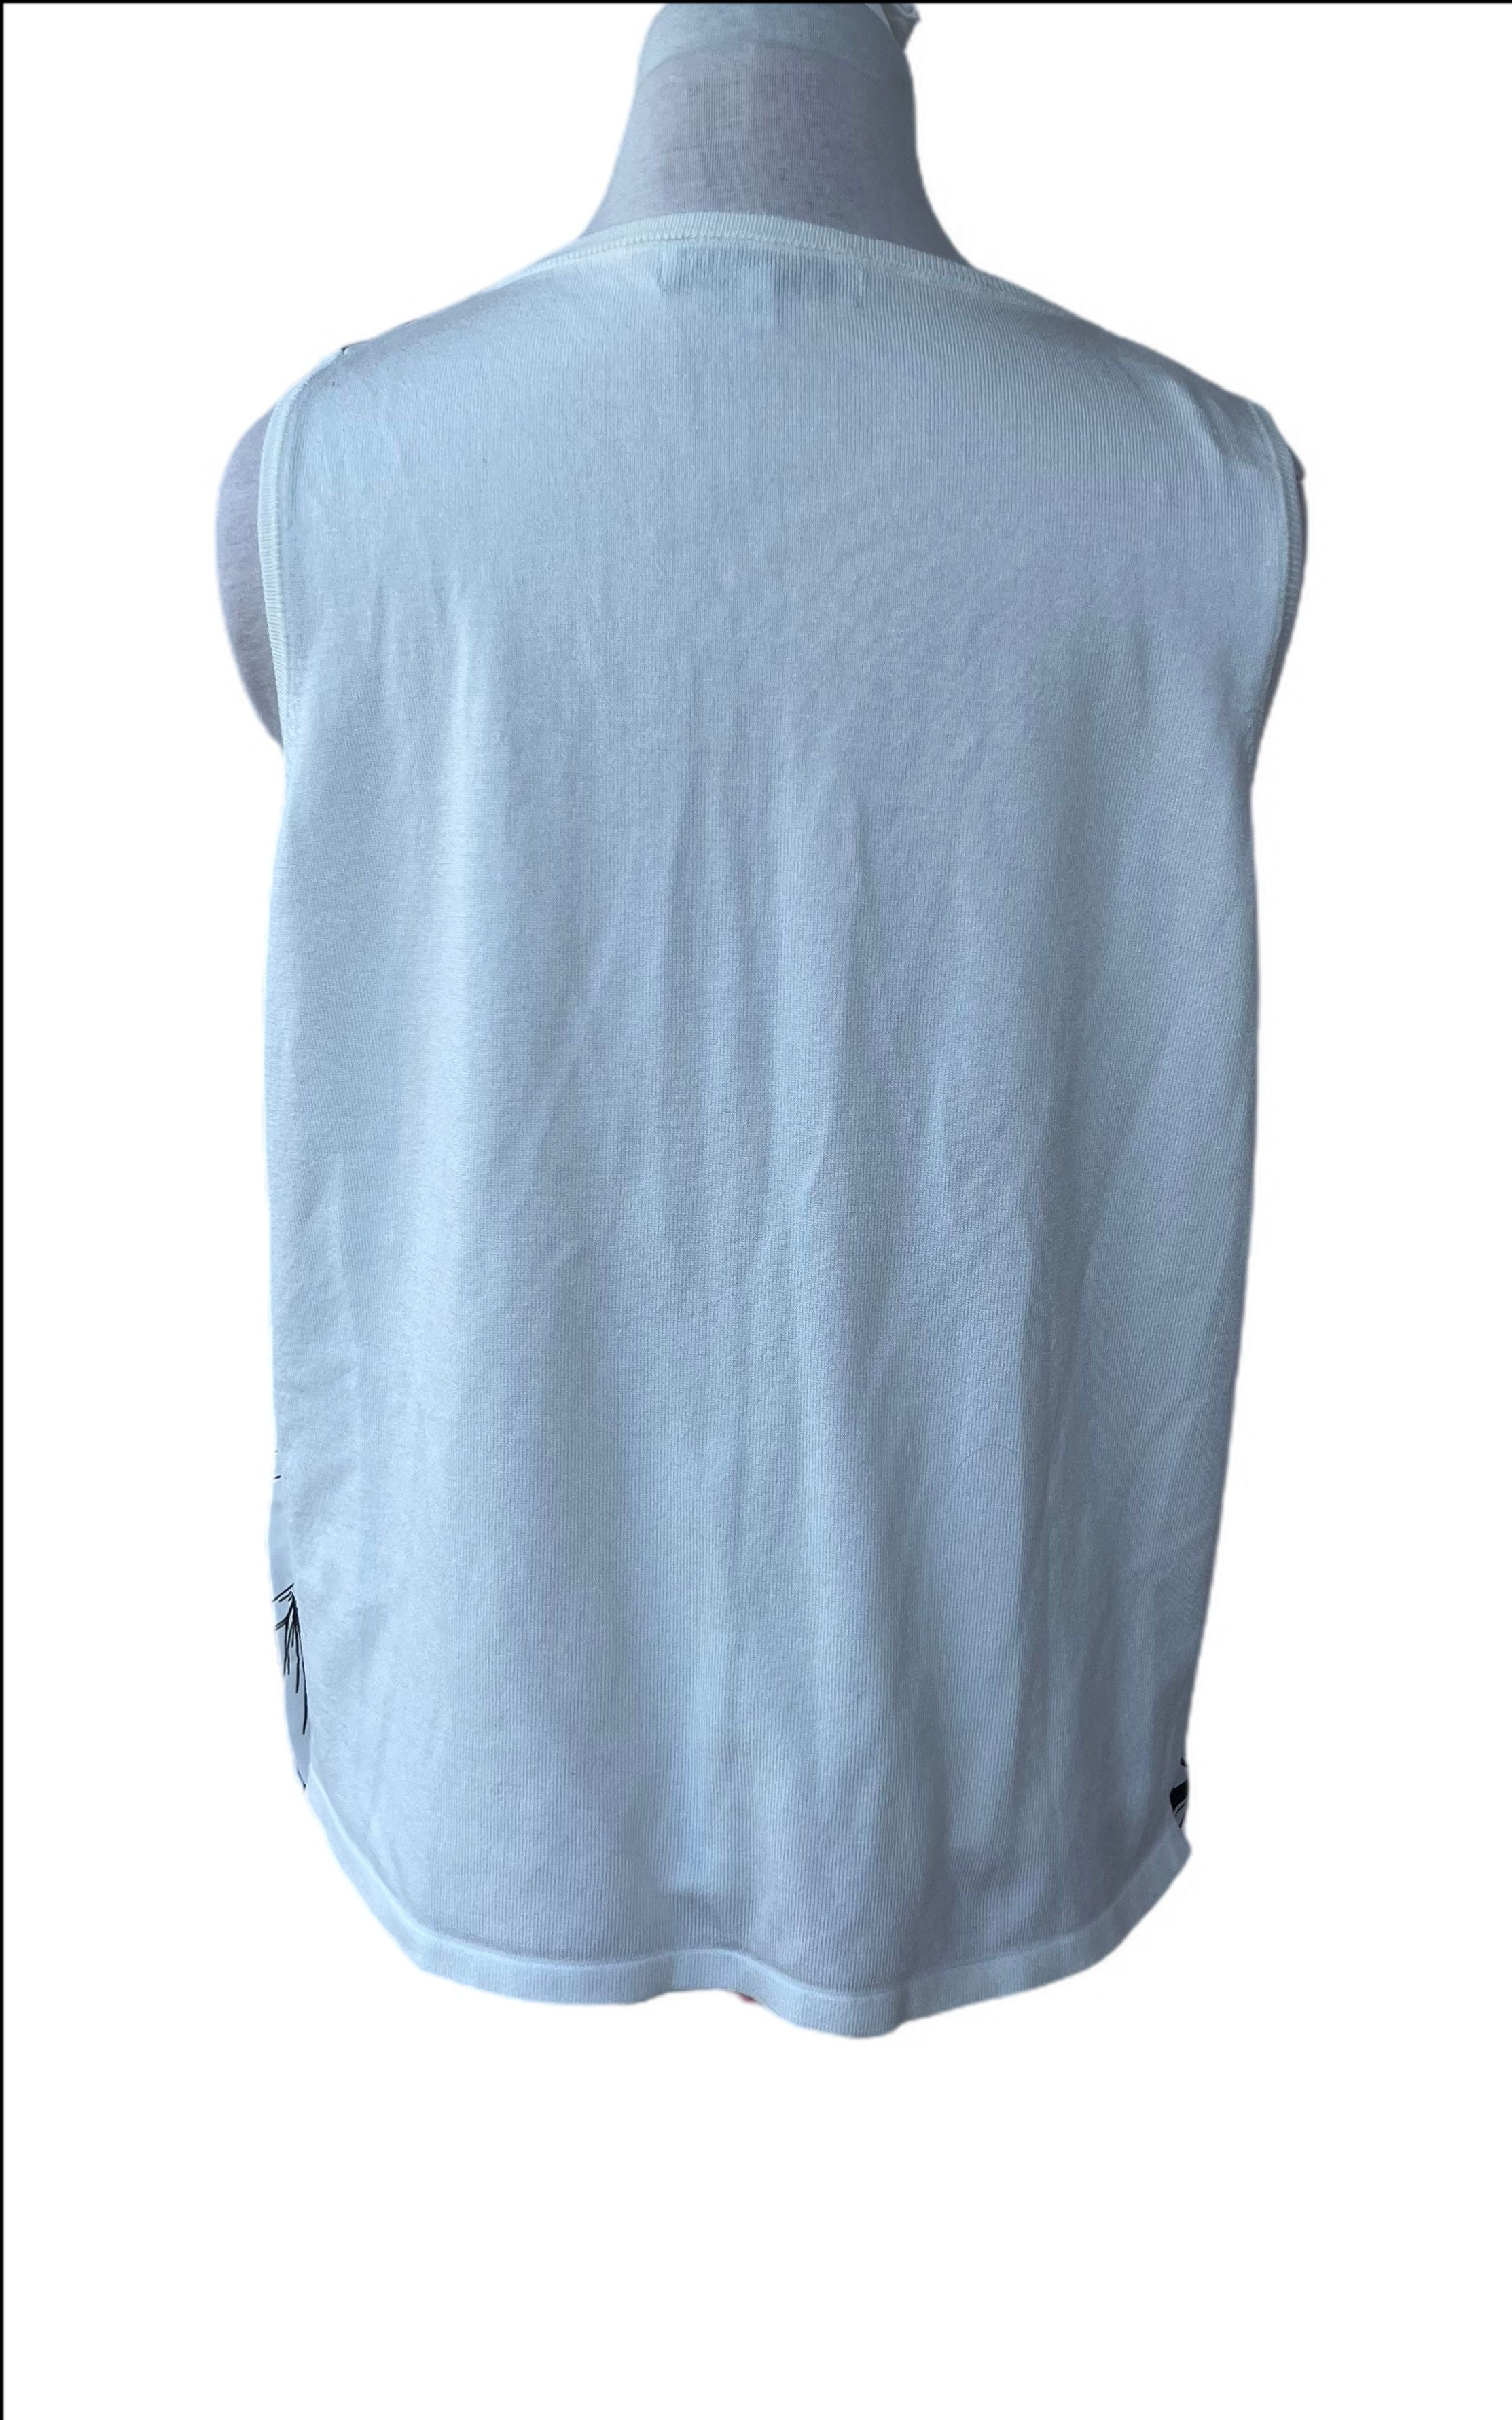 Crossover printed sleeveless top